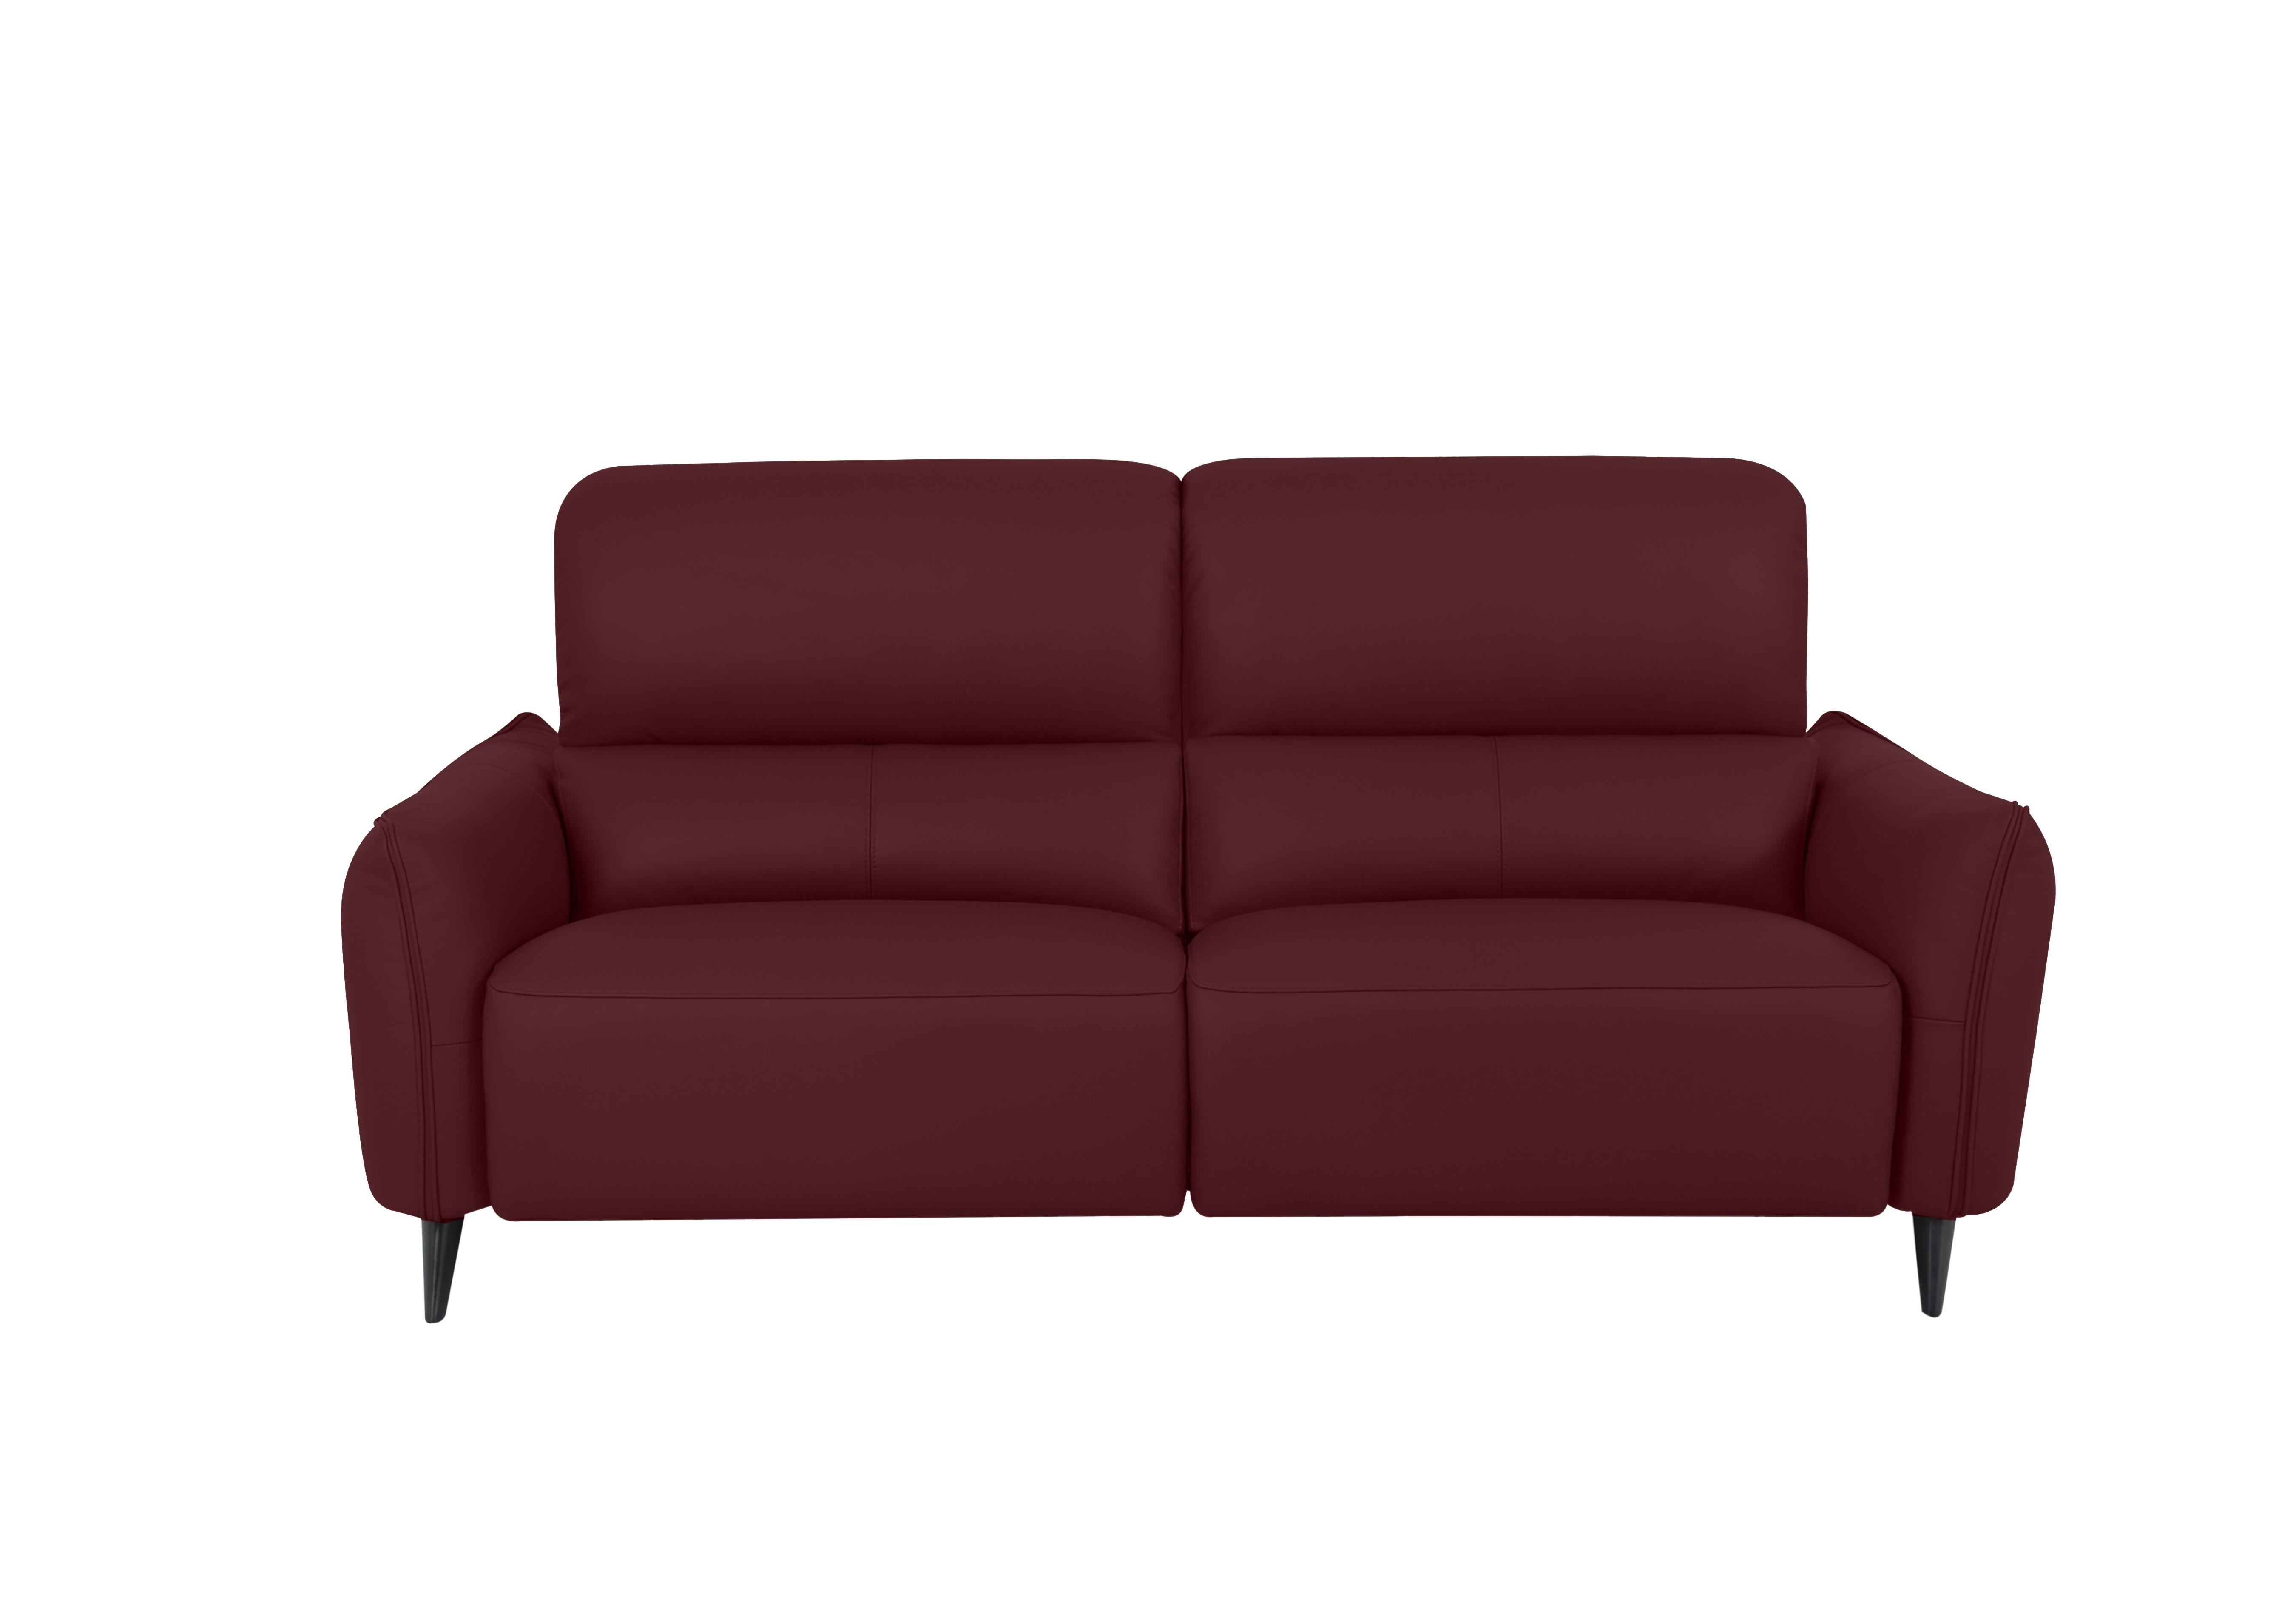 Maddox 3 Seater Leather Sofa in Nn-569e Burgundy on Furniture Village